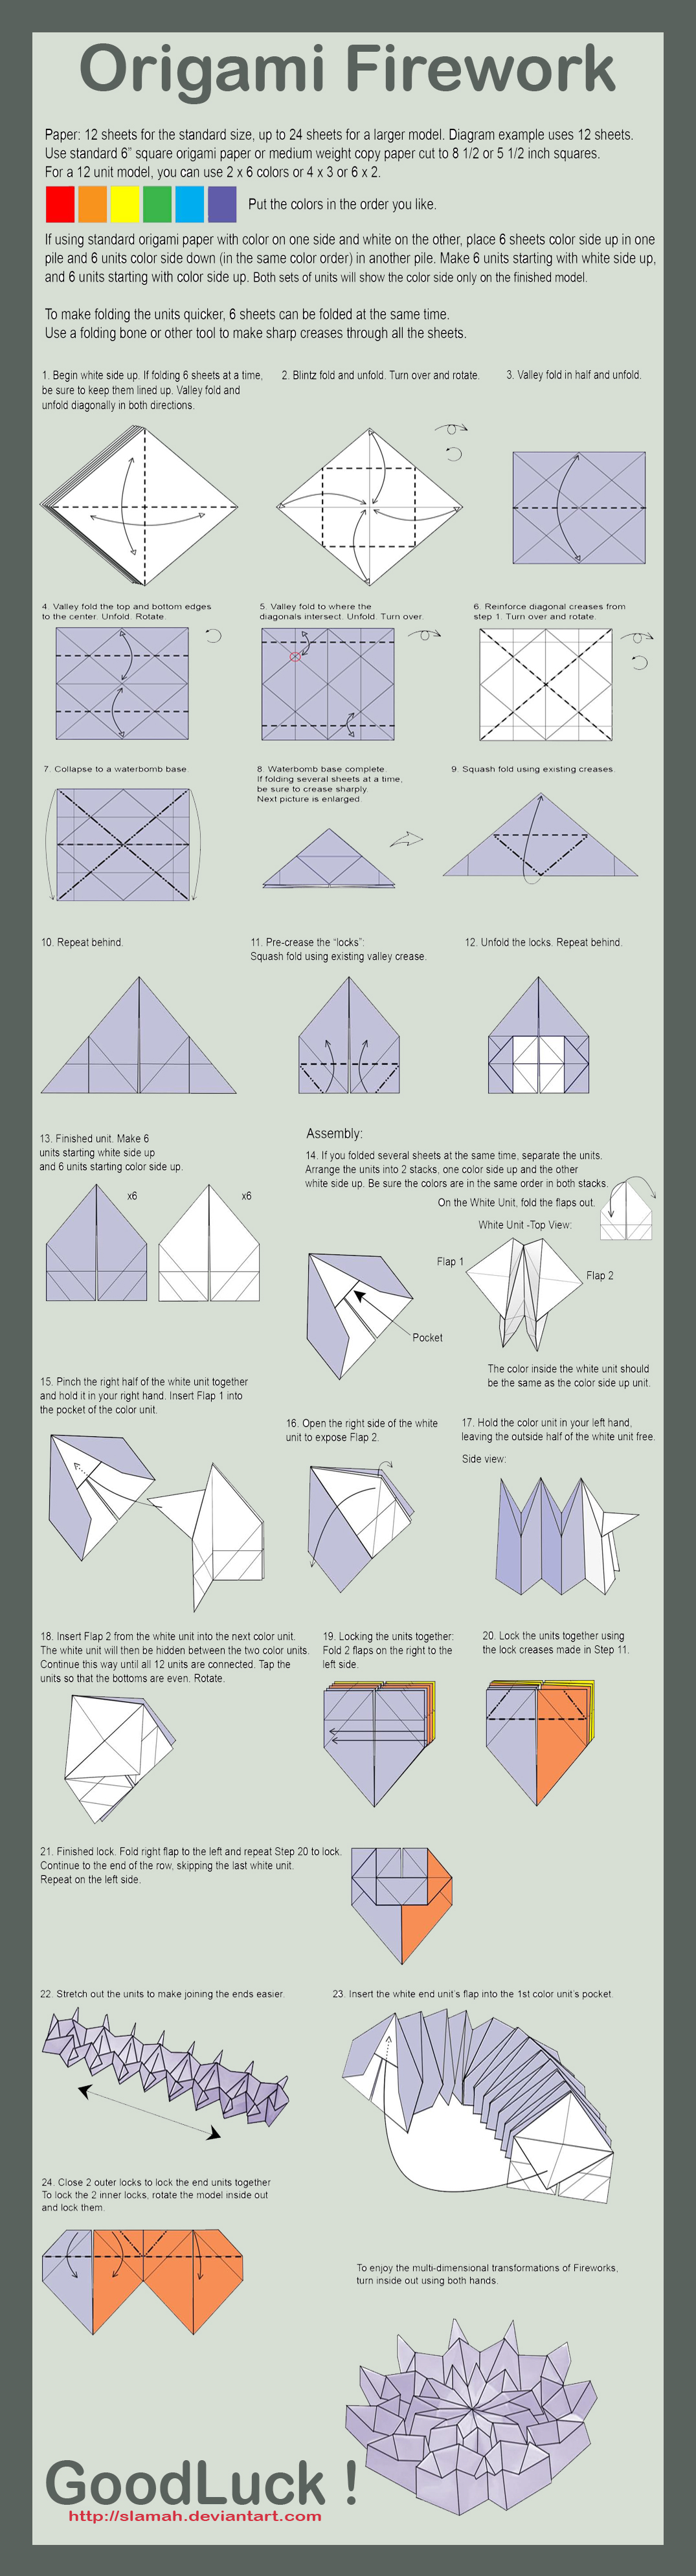 origami fireworks diagram